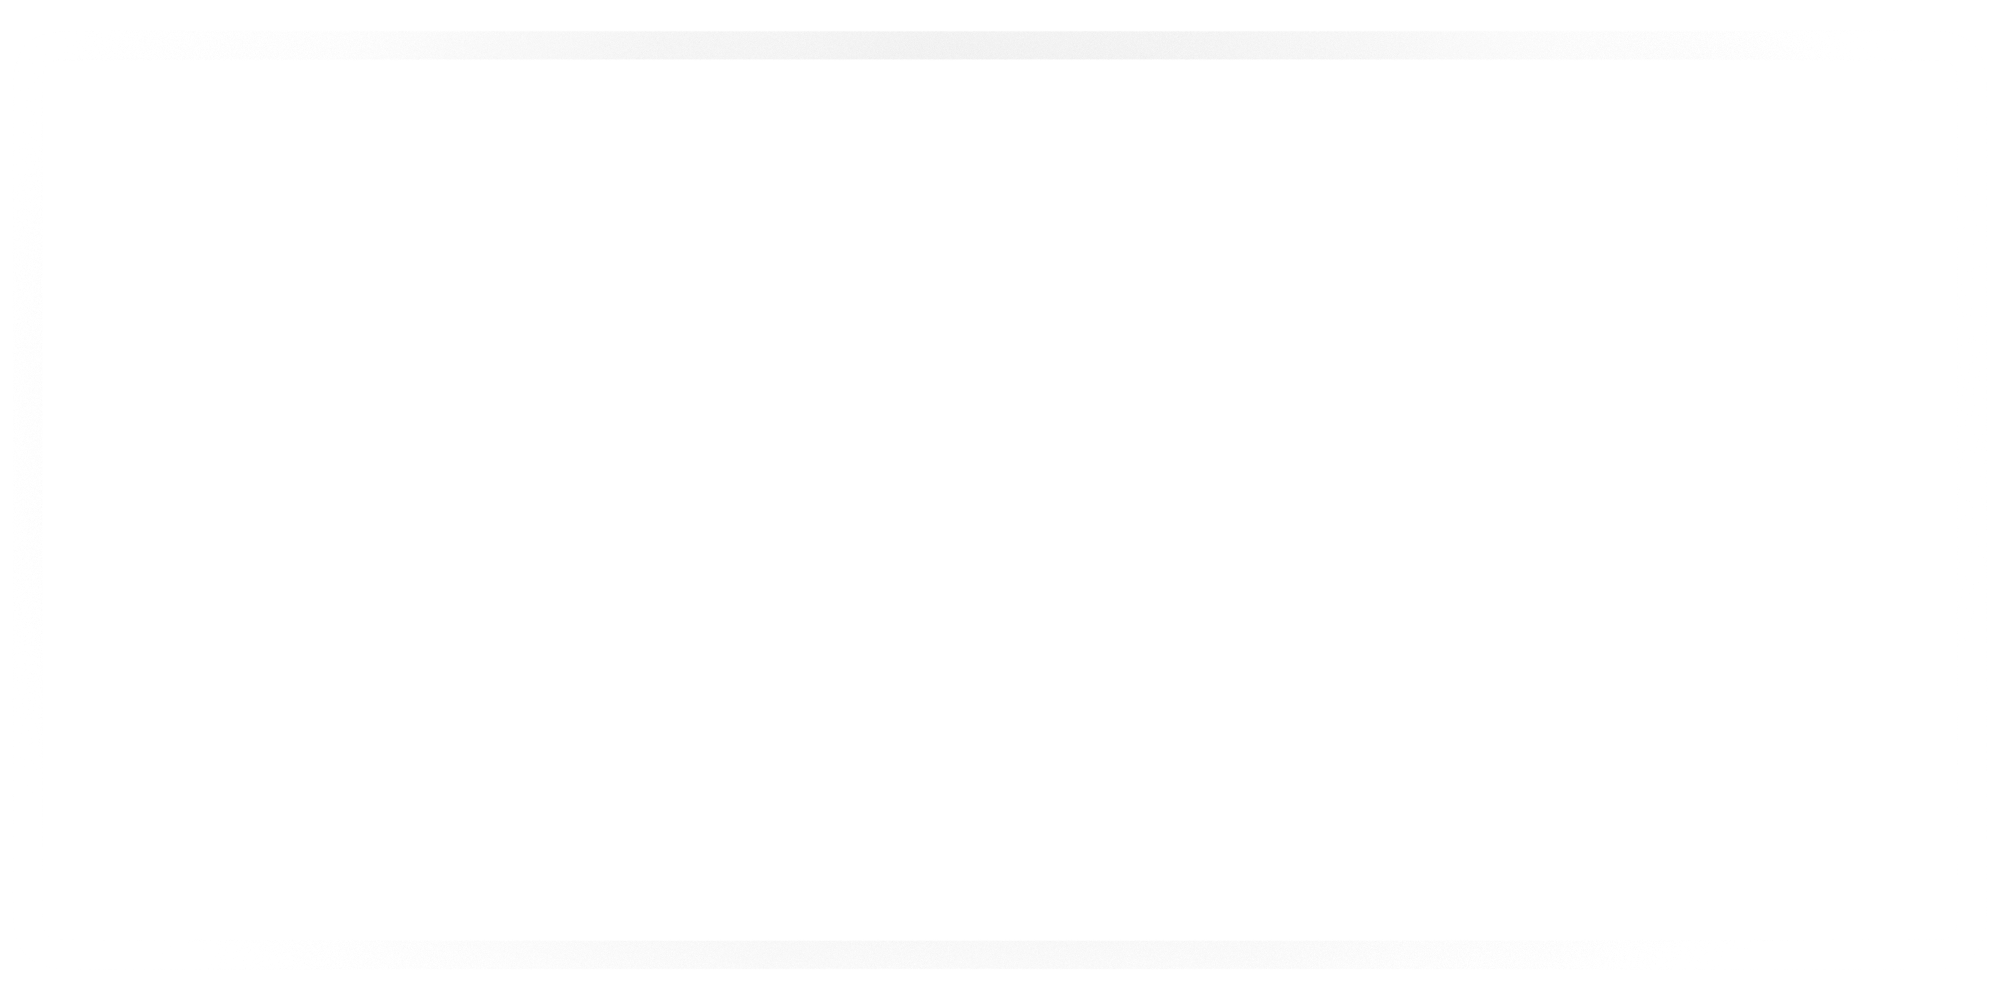 Logo of S.L.E.F.'